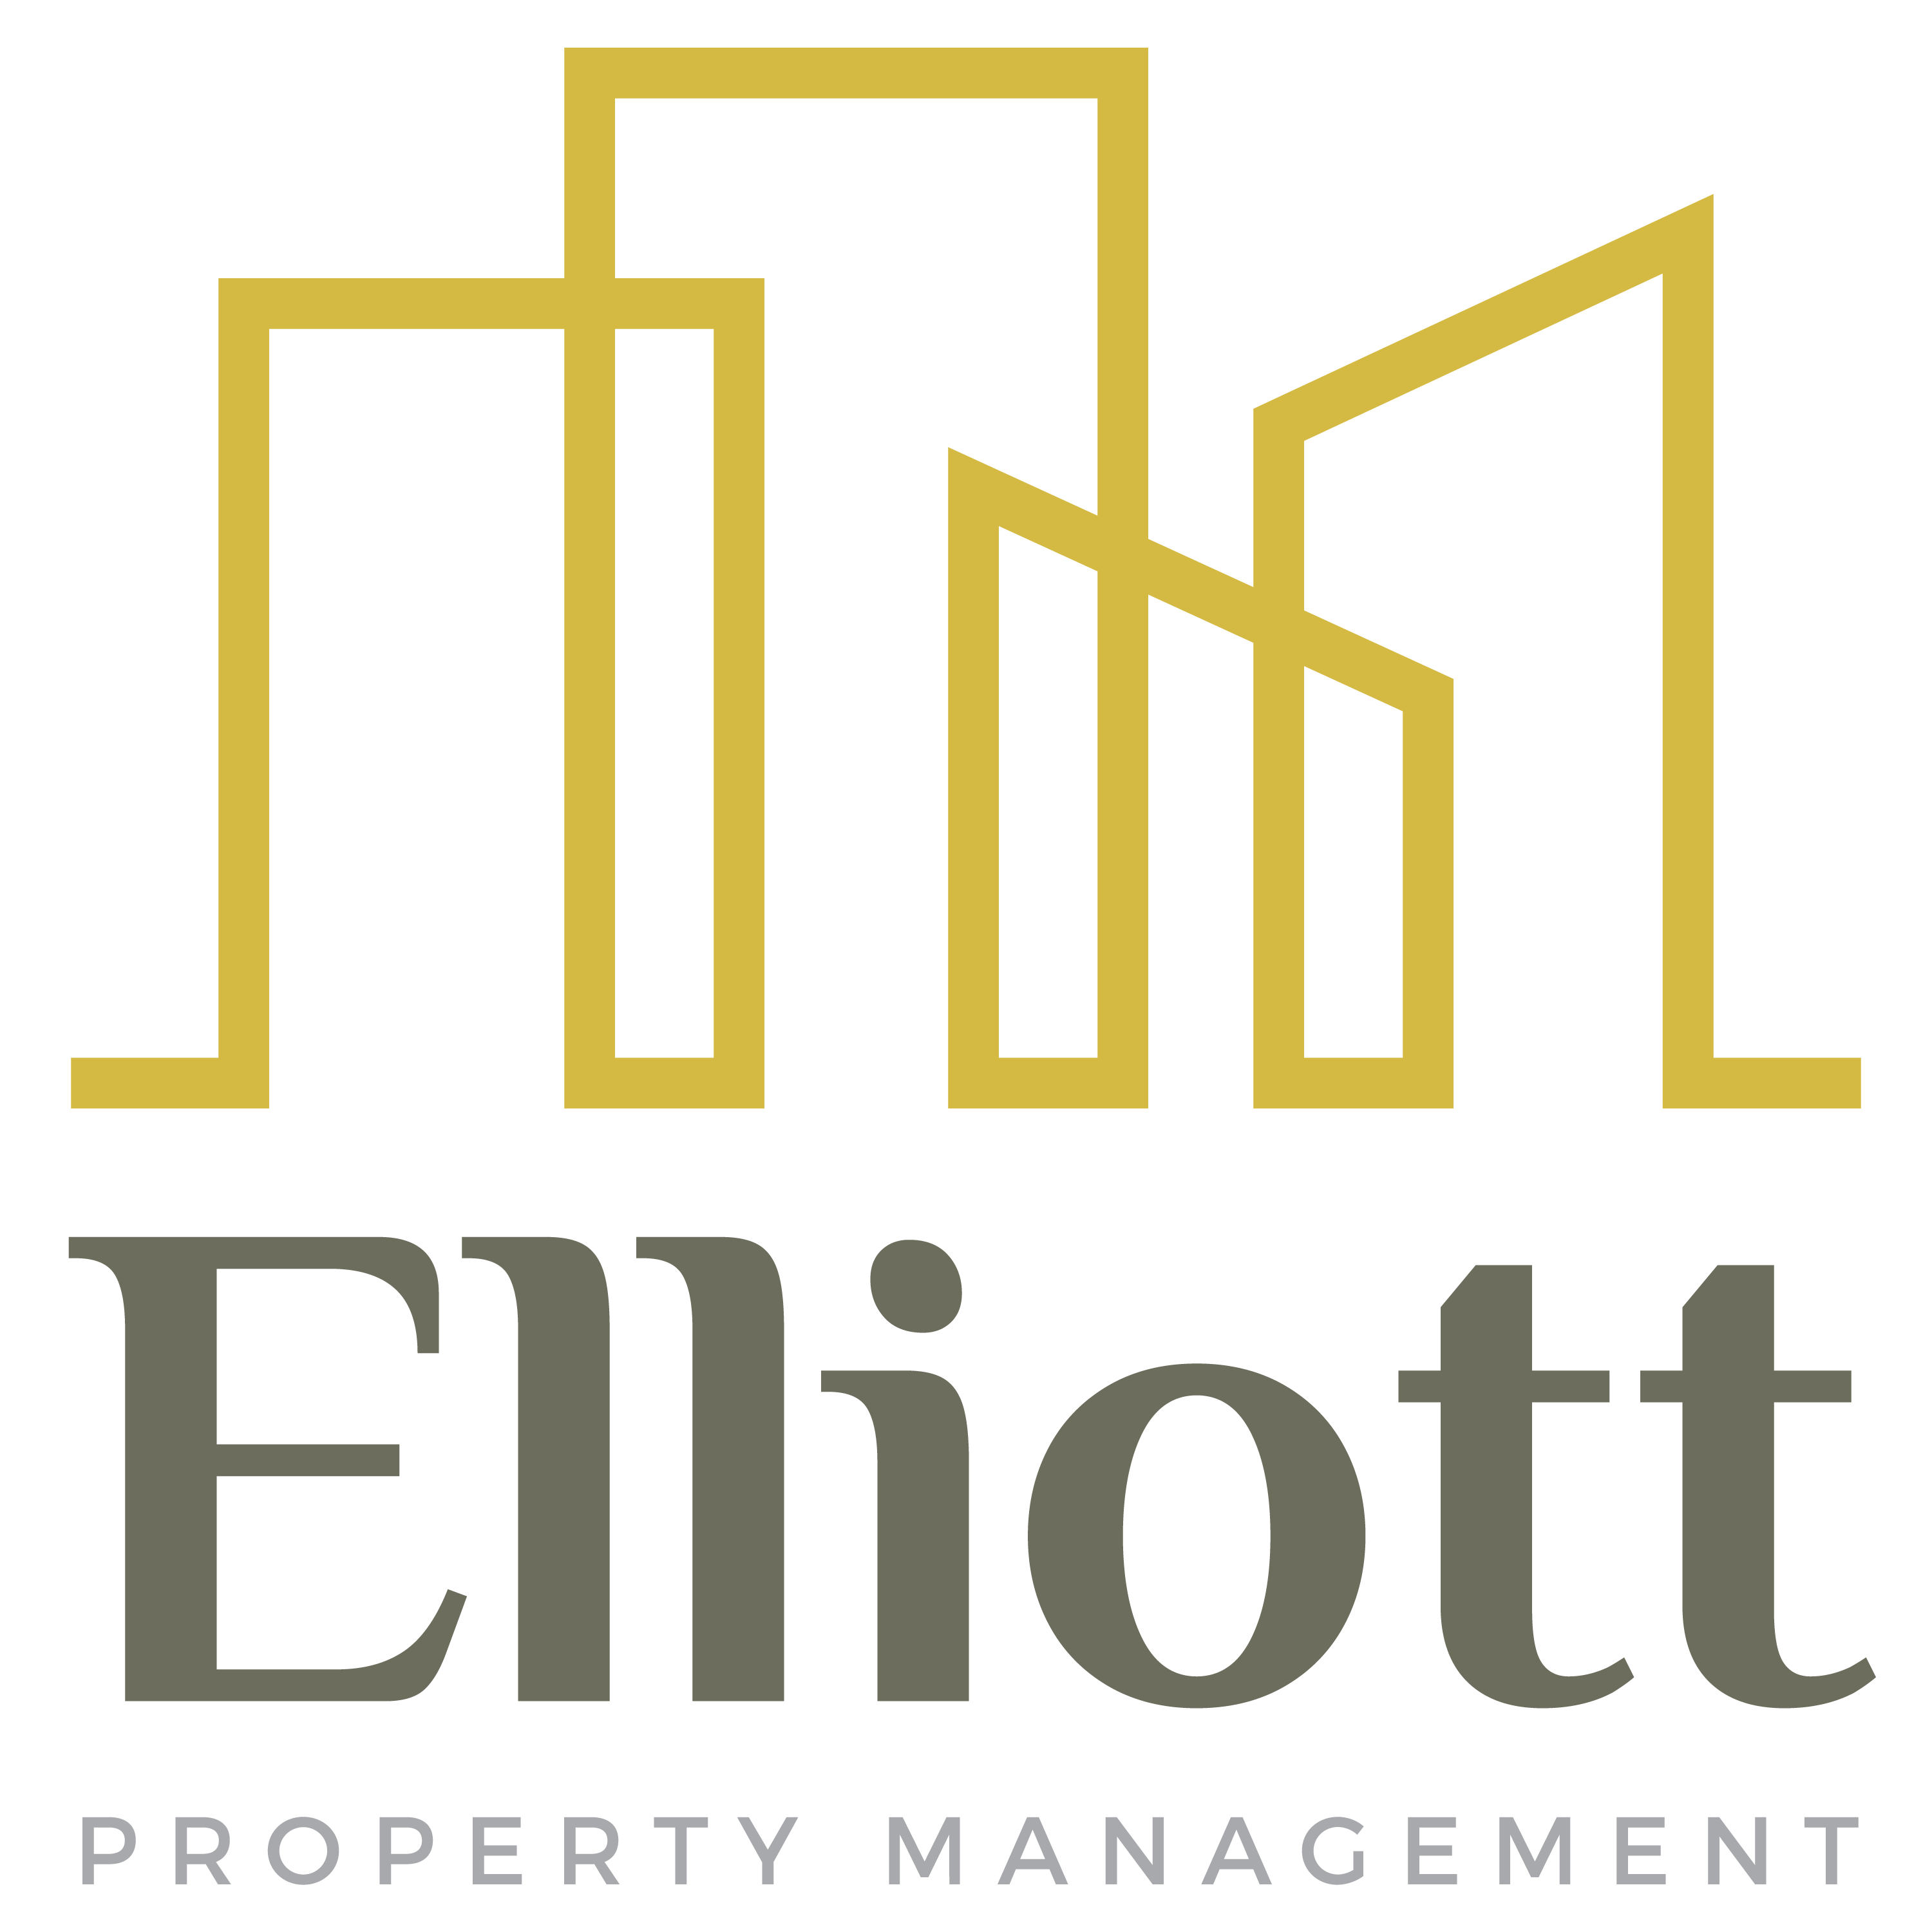 Elliott Property Management